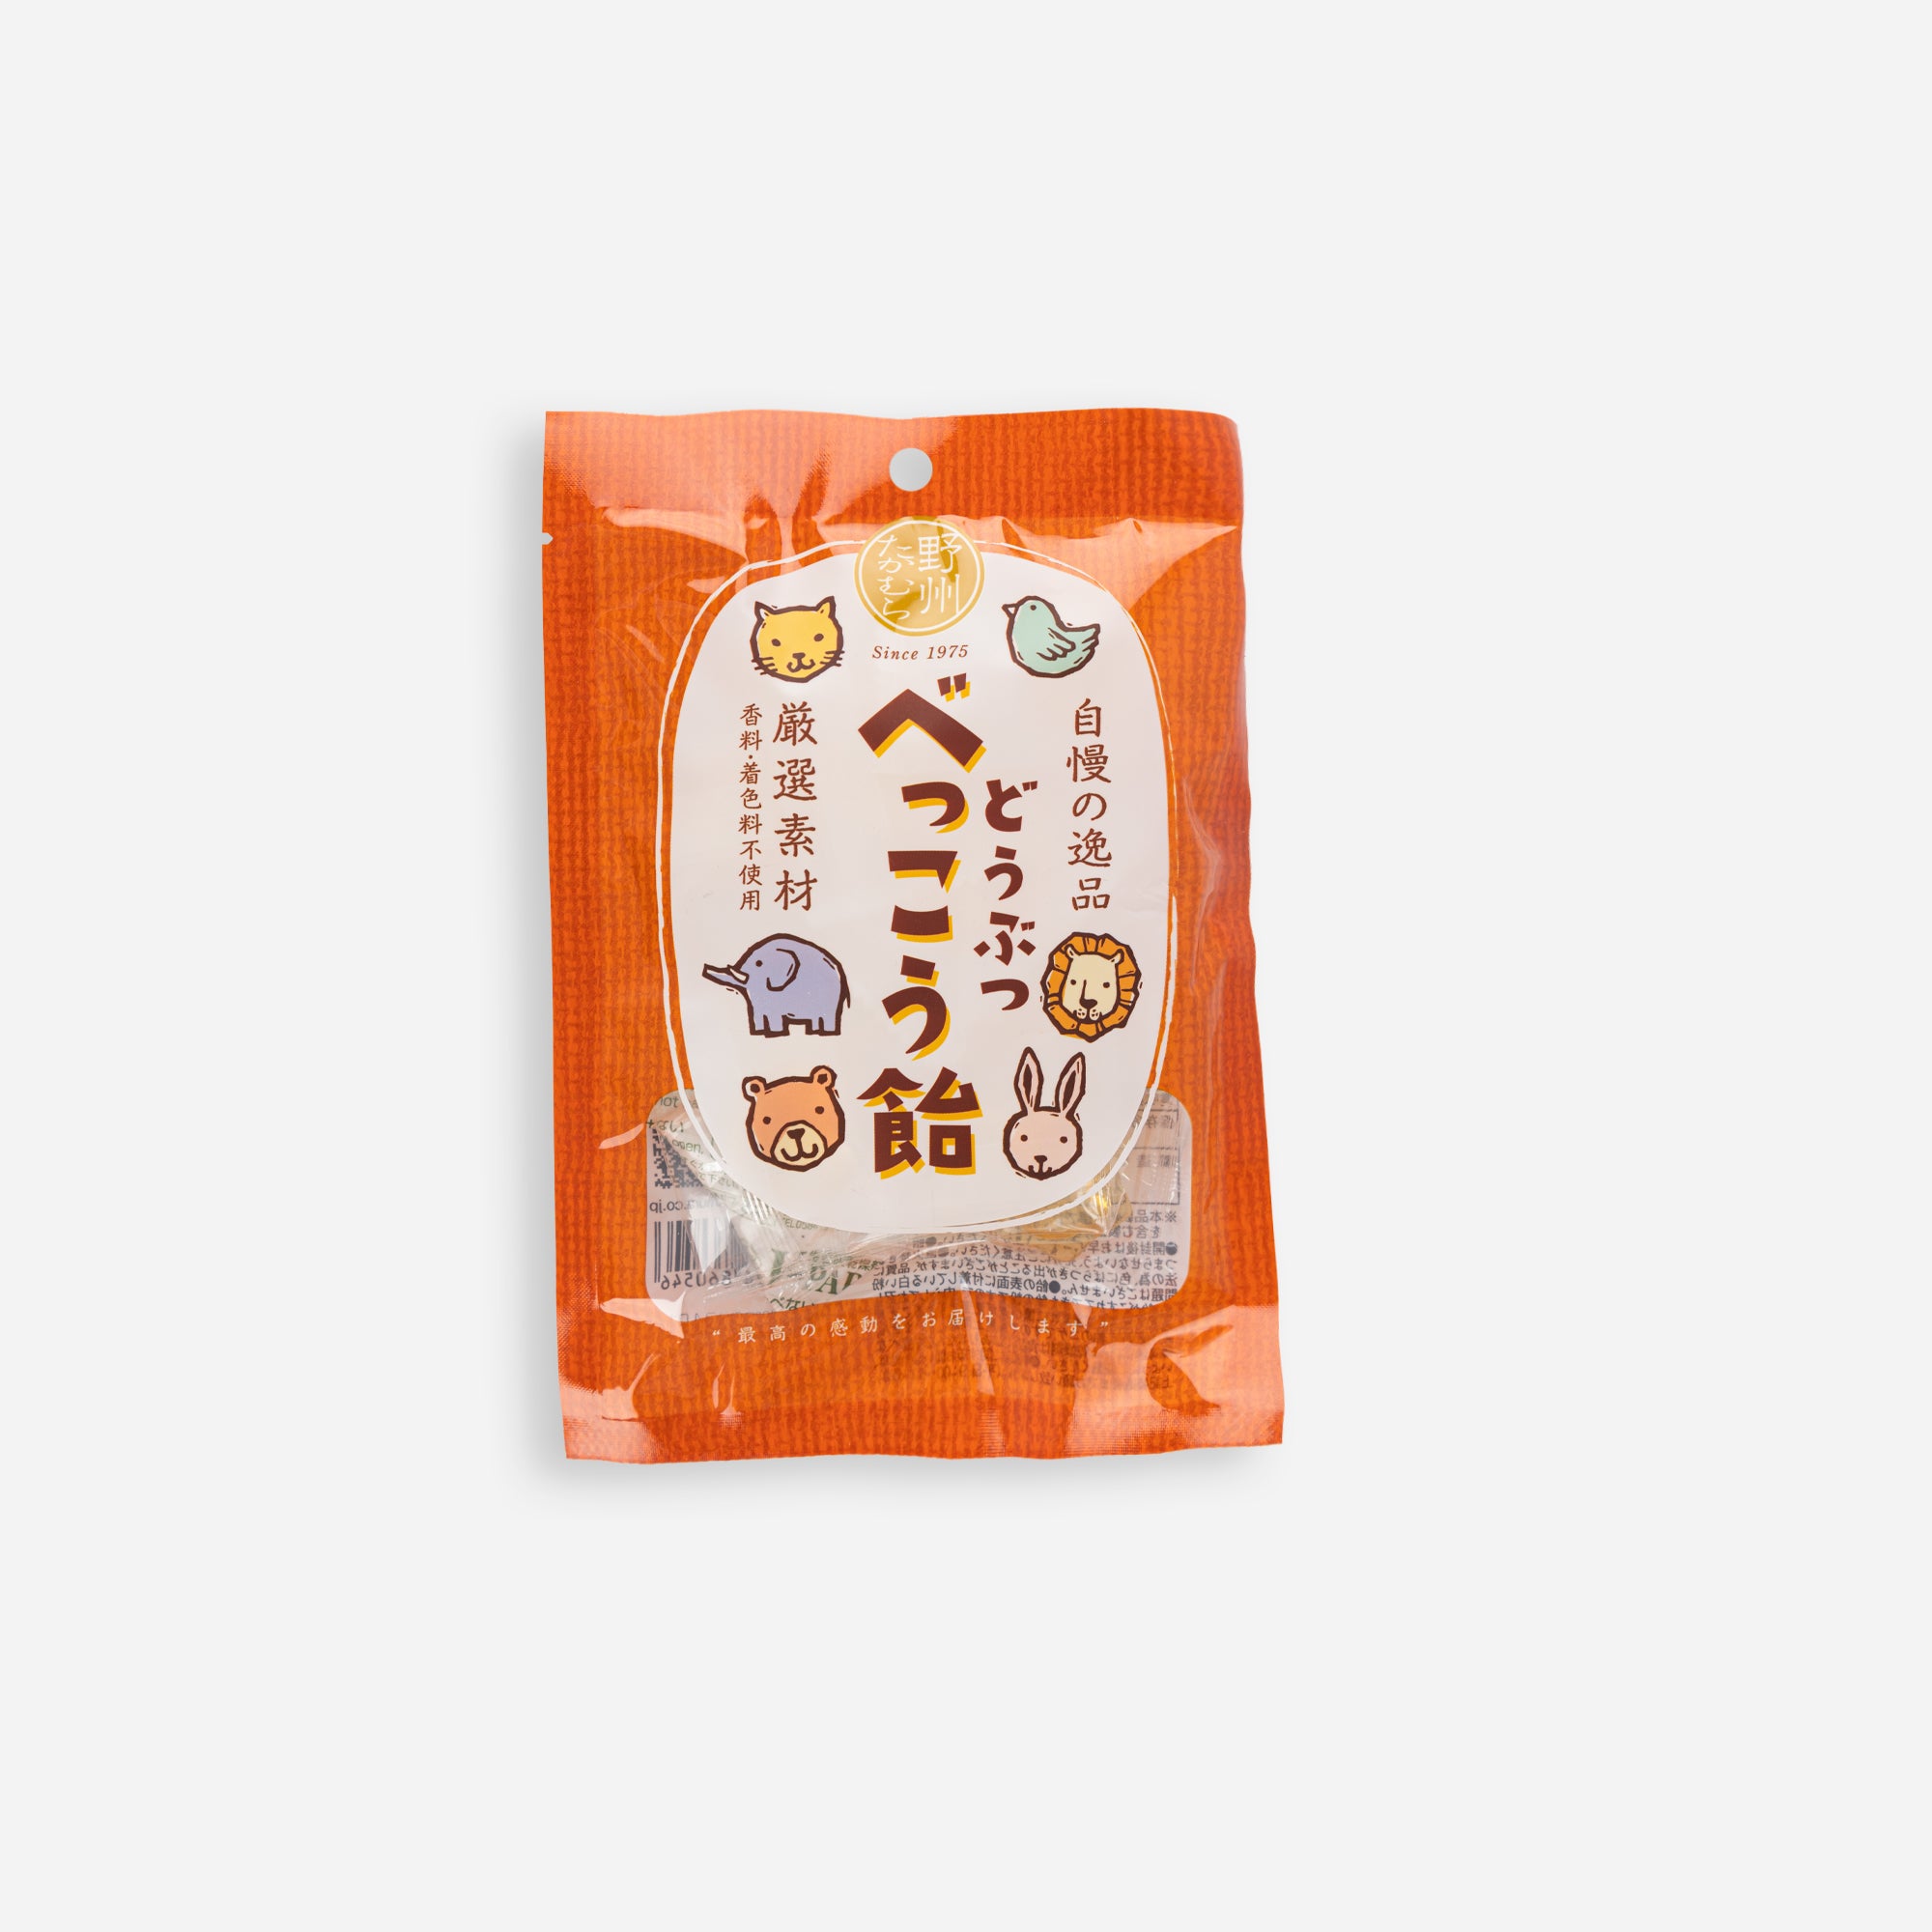 Takamura animal bekko candy